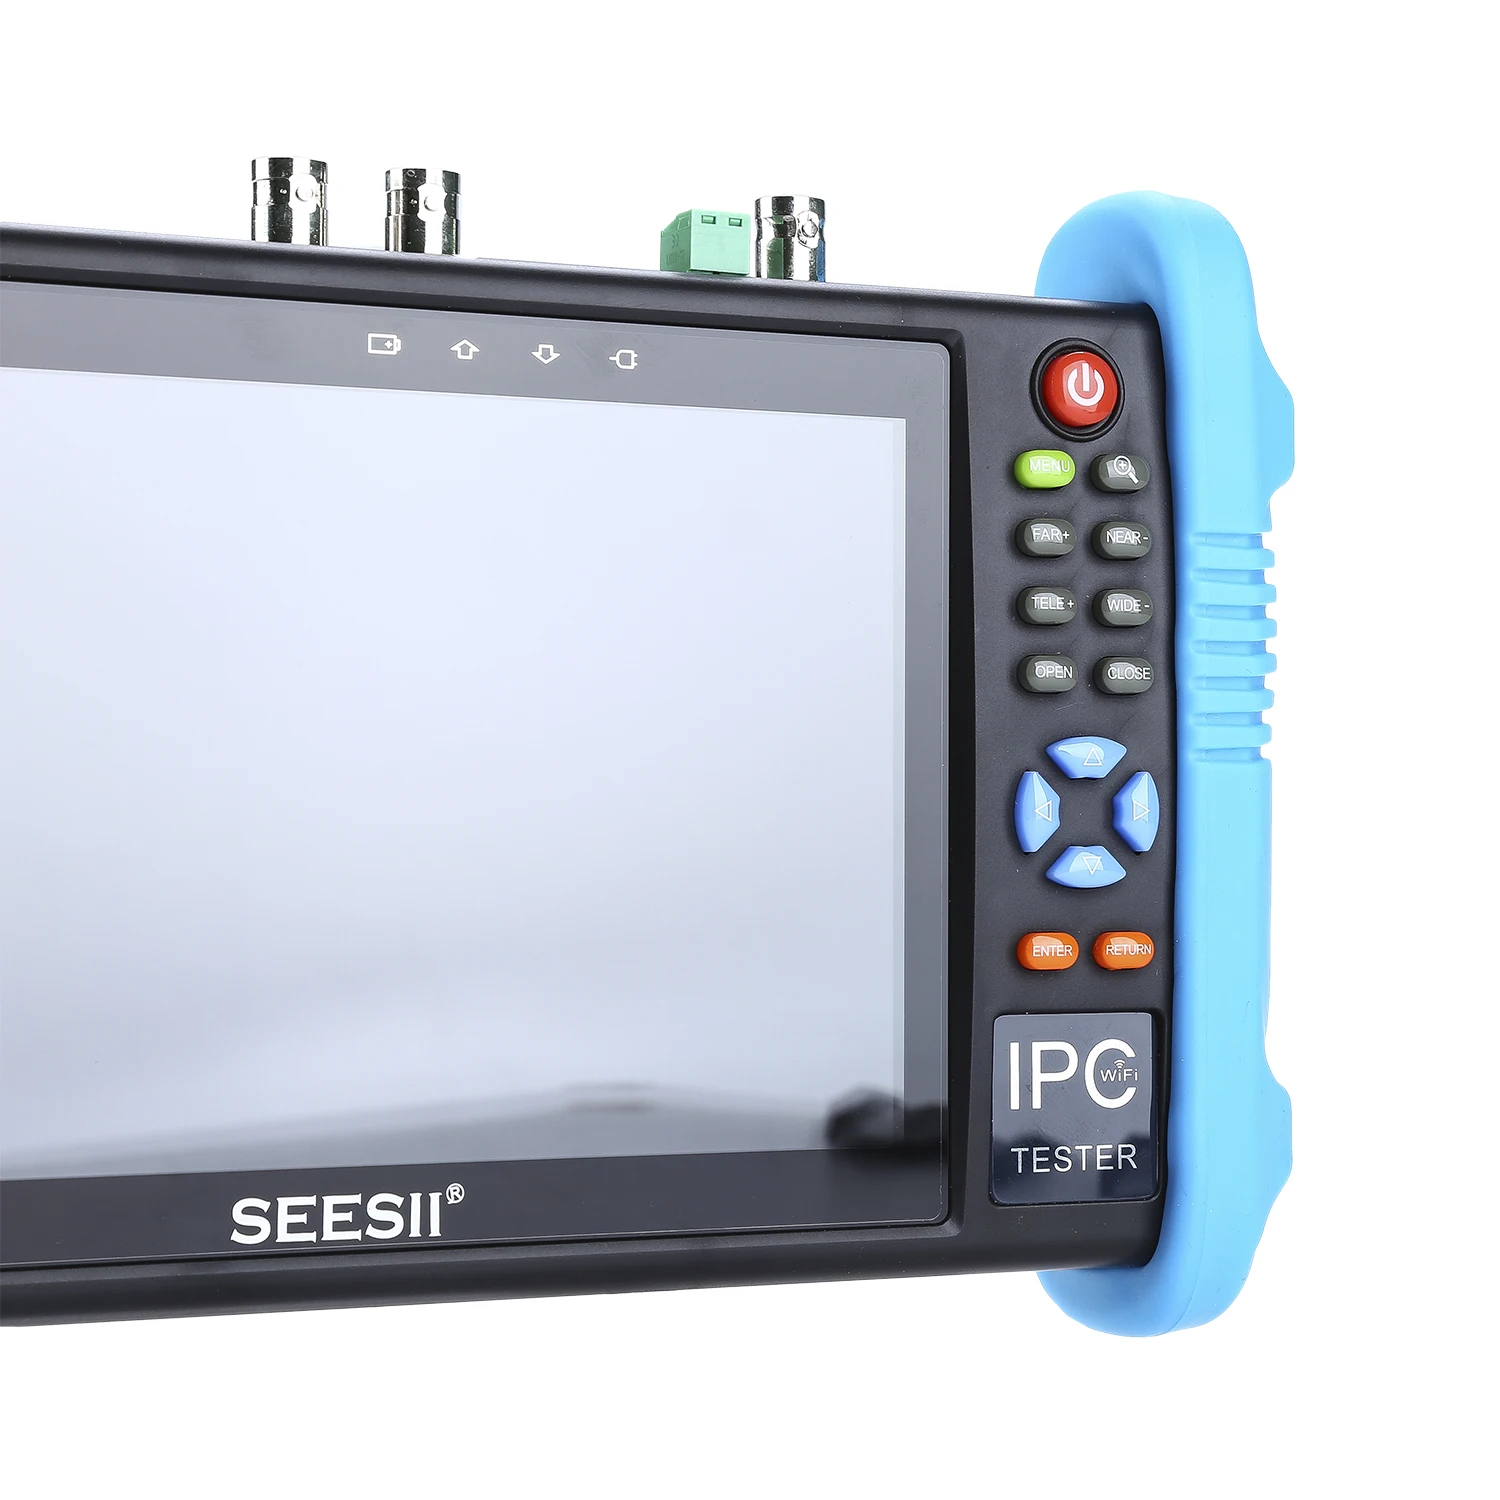 SEESII IPC-9800ADHSPLUS " ips сенсорный экран H.265 ip-камера тест er 4K 1080P CCTV AHD SDI CVBS Аналоговое видео тест HDMl PTZ контроль